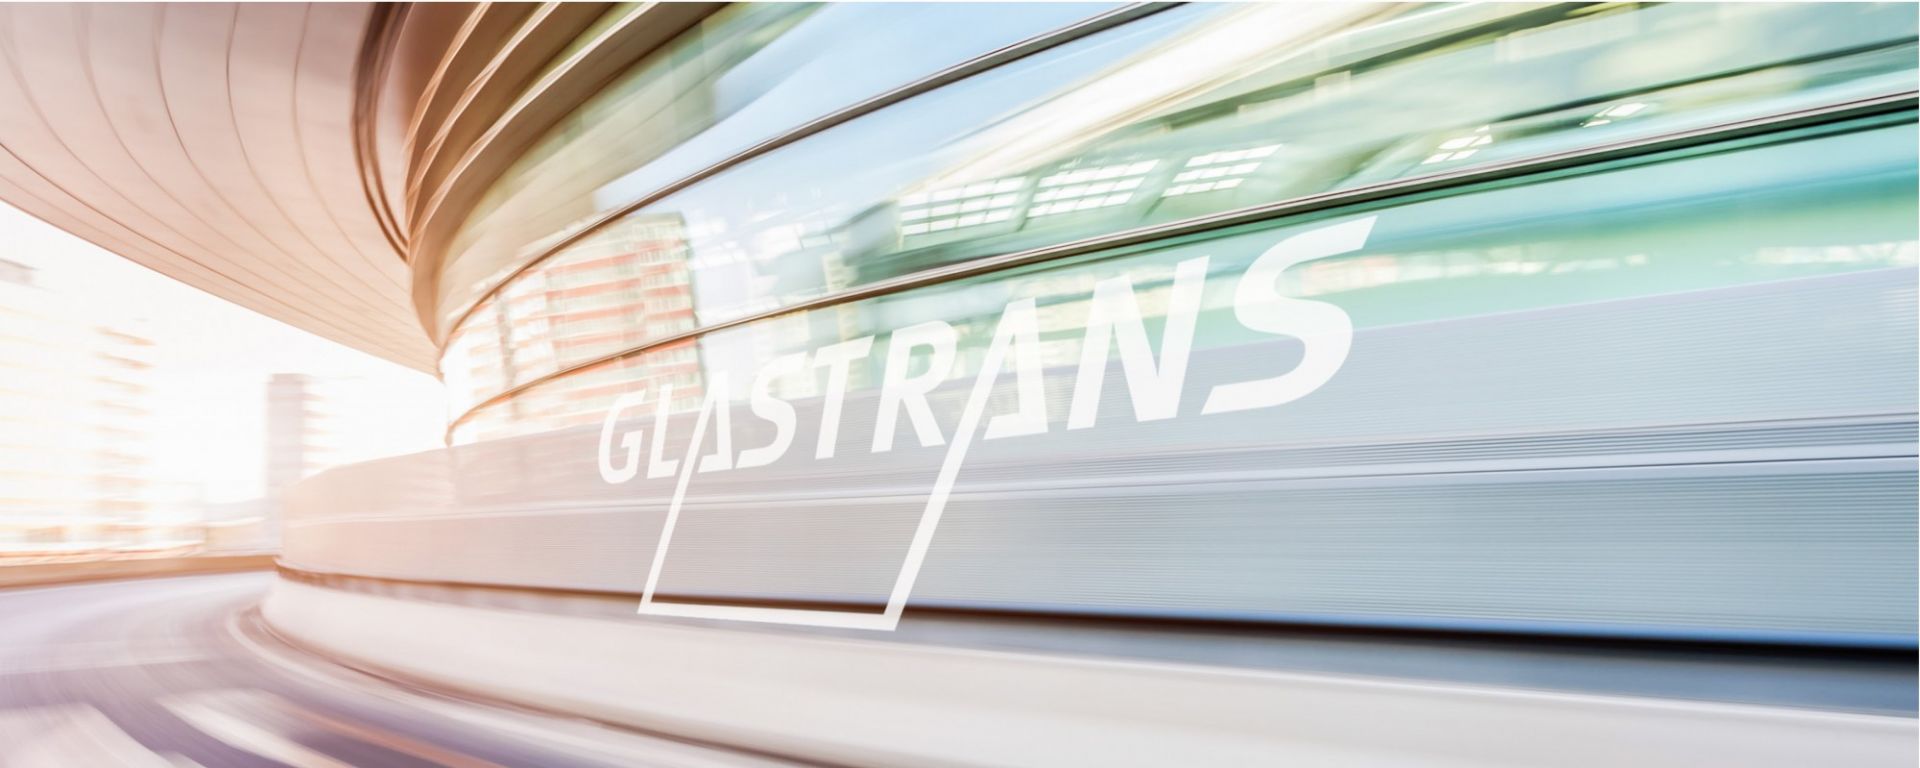 Glastrans Gelsenkirchen Glas Spedition Transport